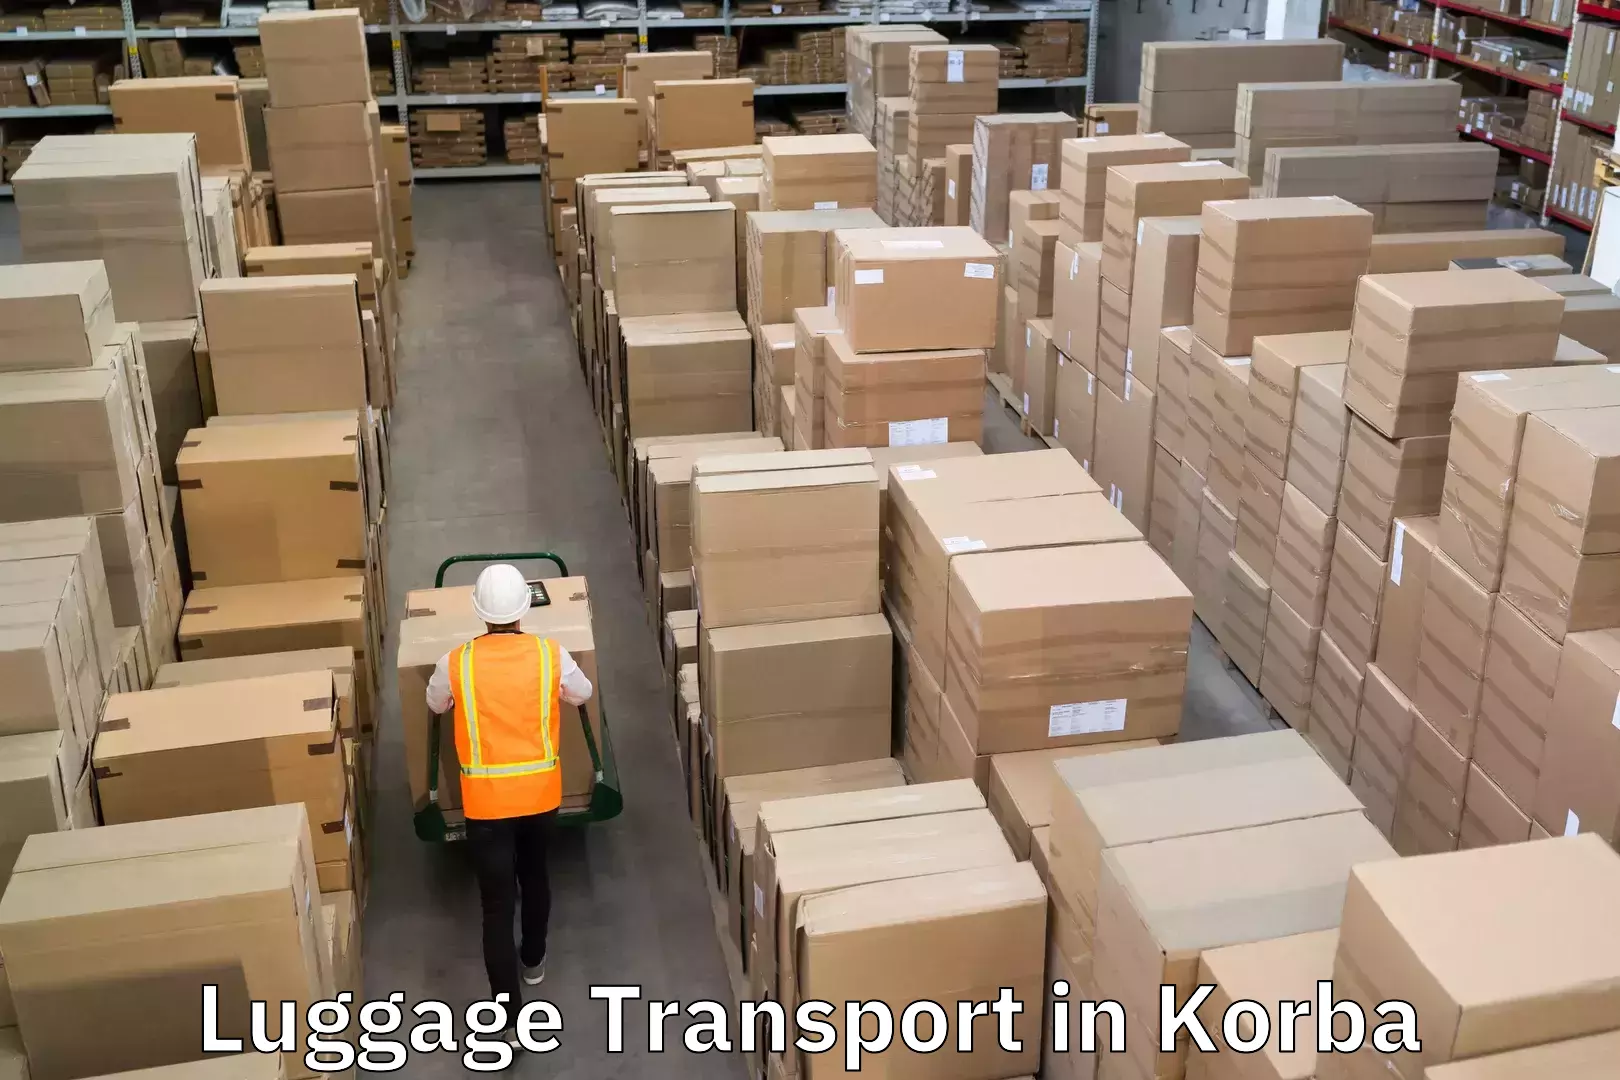 Business luggage transport in Korba